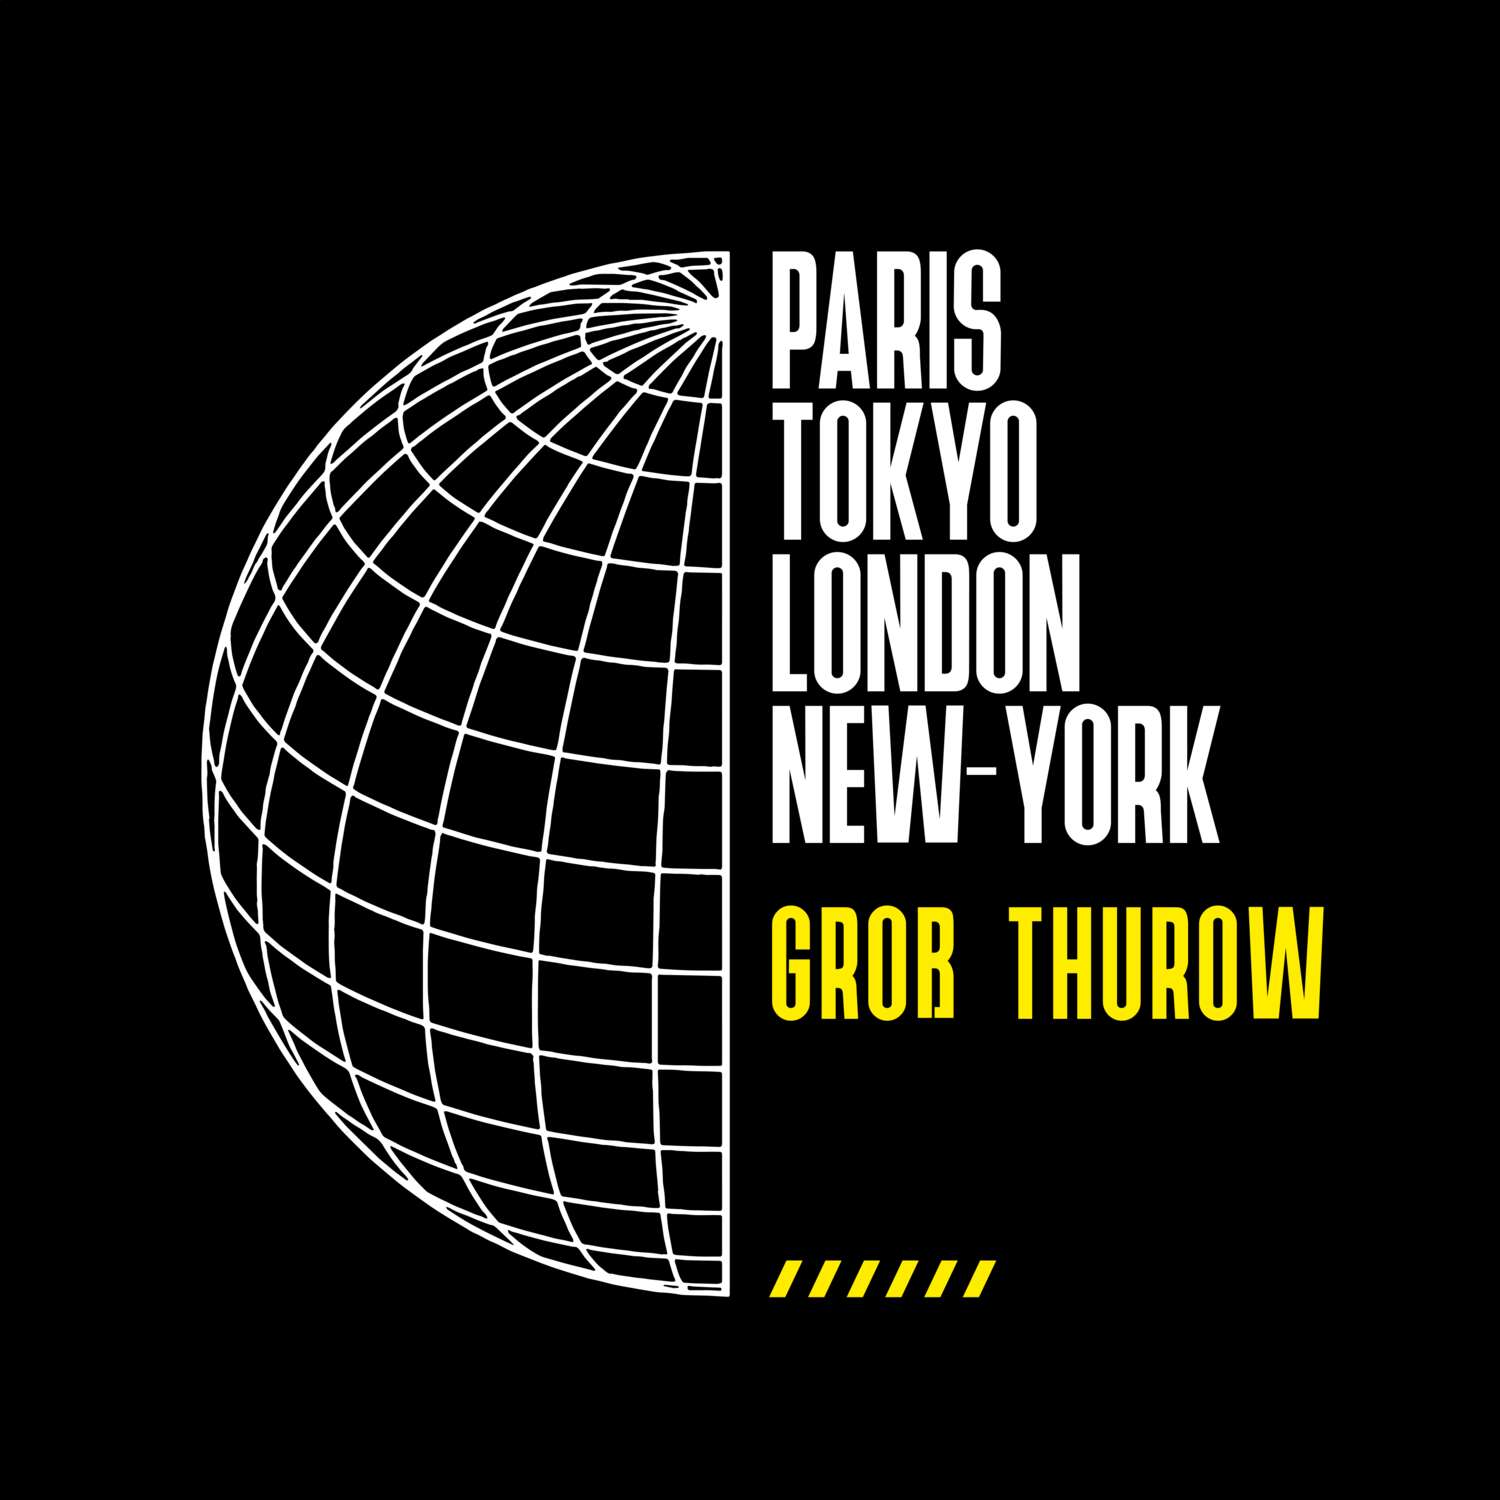 Groß Thurow T-Shirt »Paris Tokyo London«